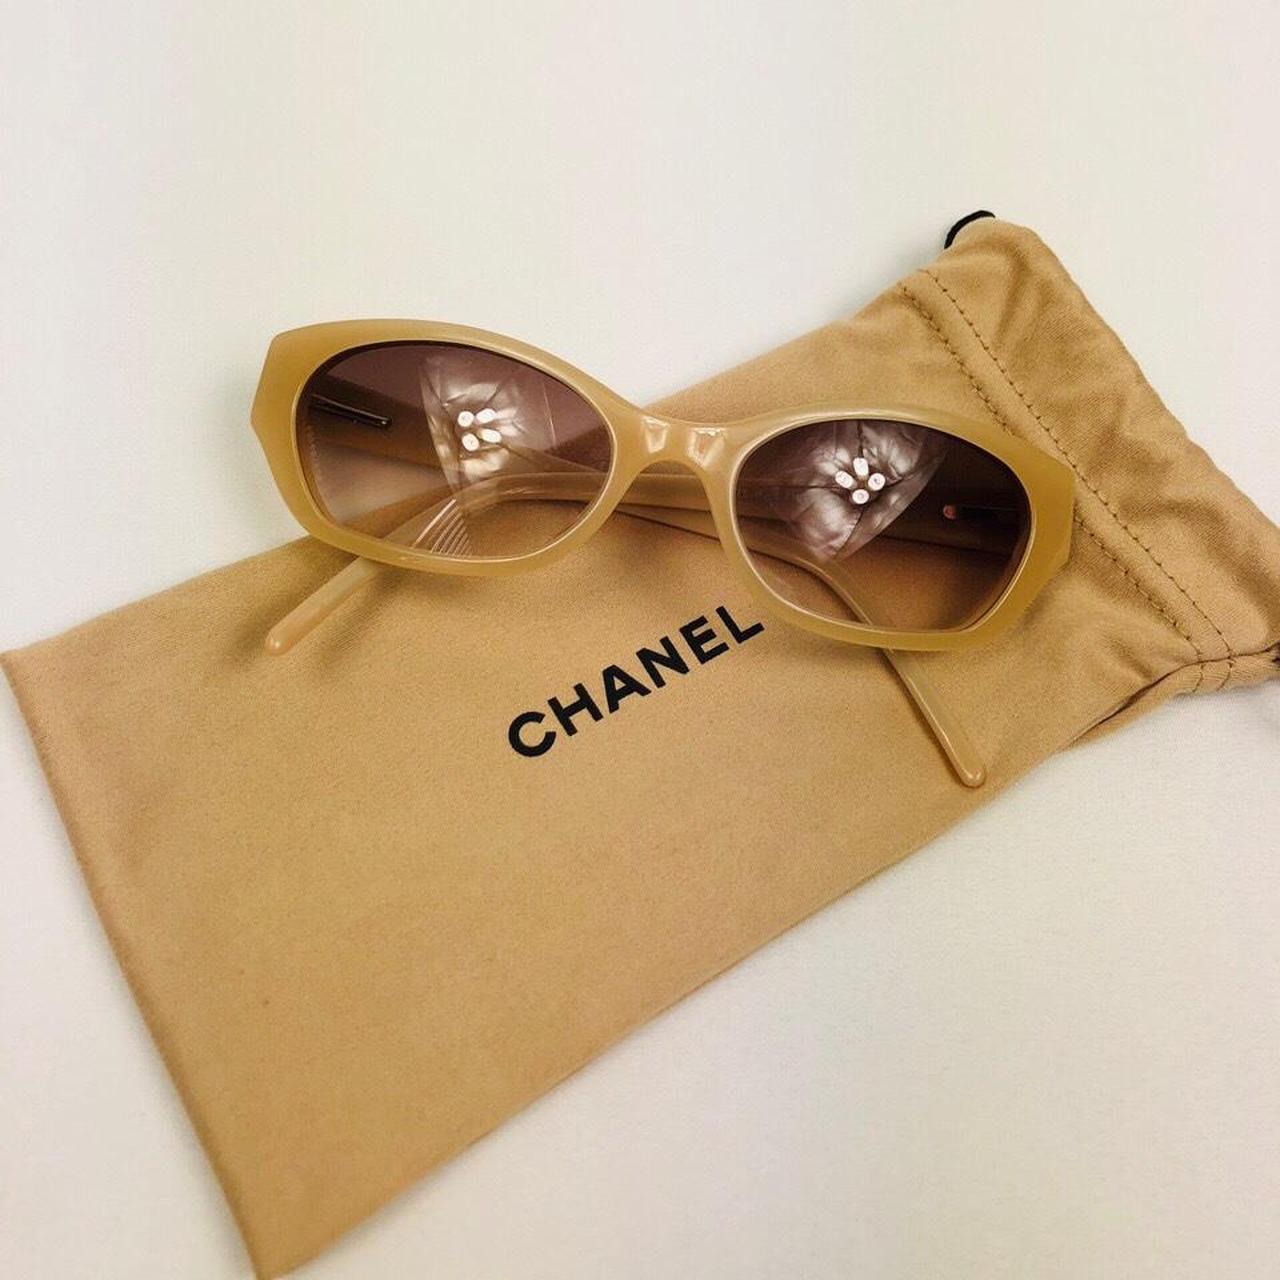 Chanel Women's Cat Eye Sunglasses - Black